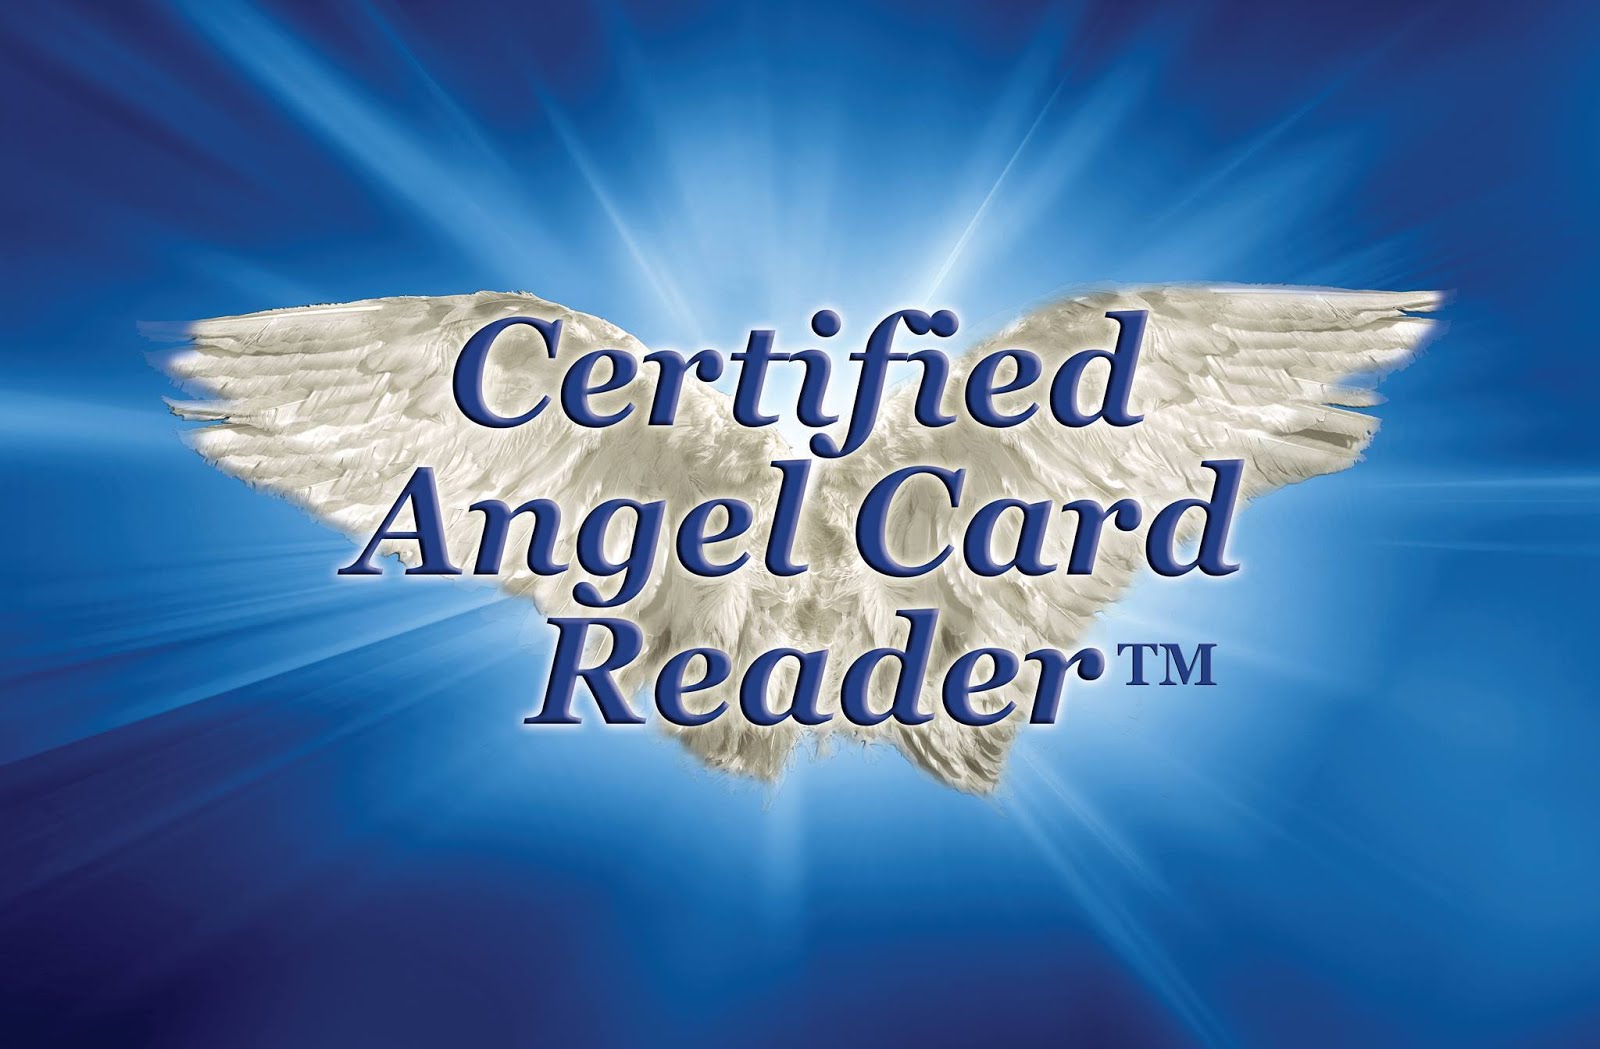 Certified Oracle Card Reader